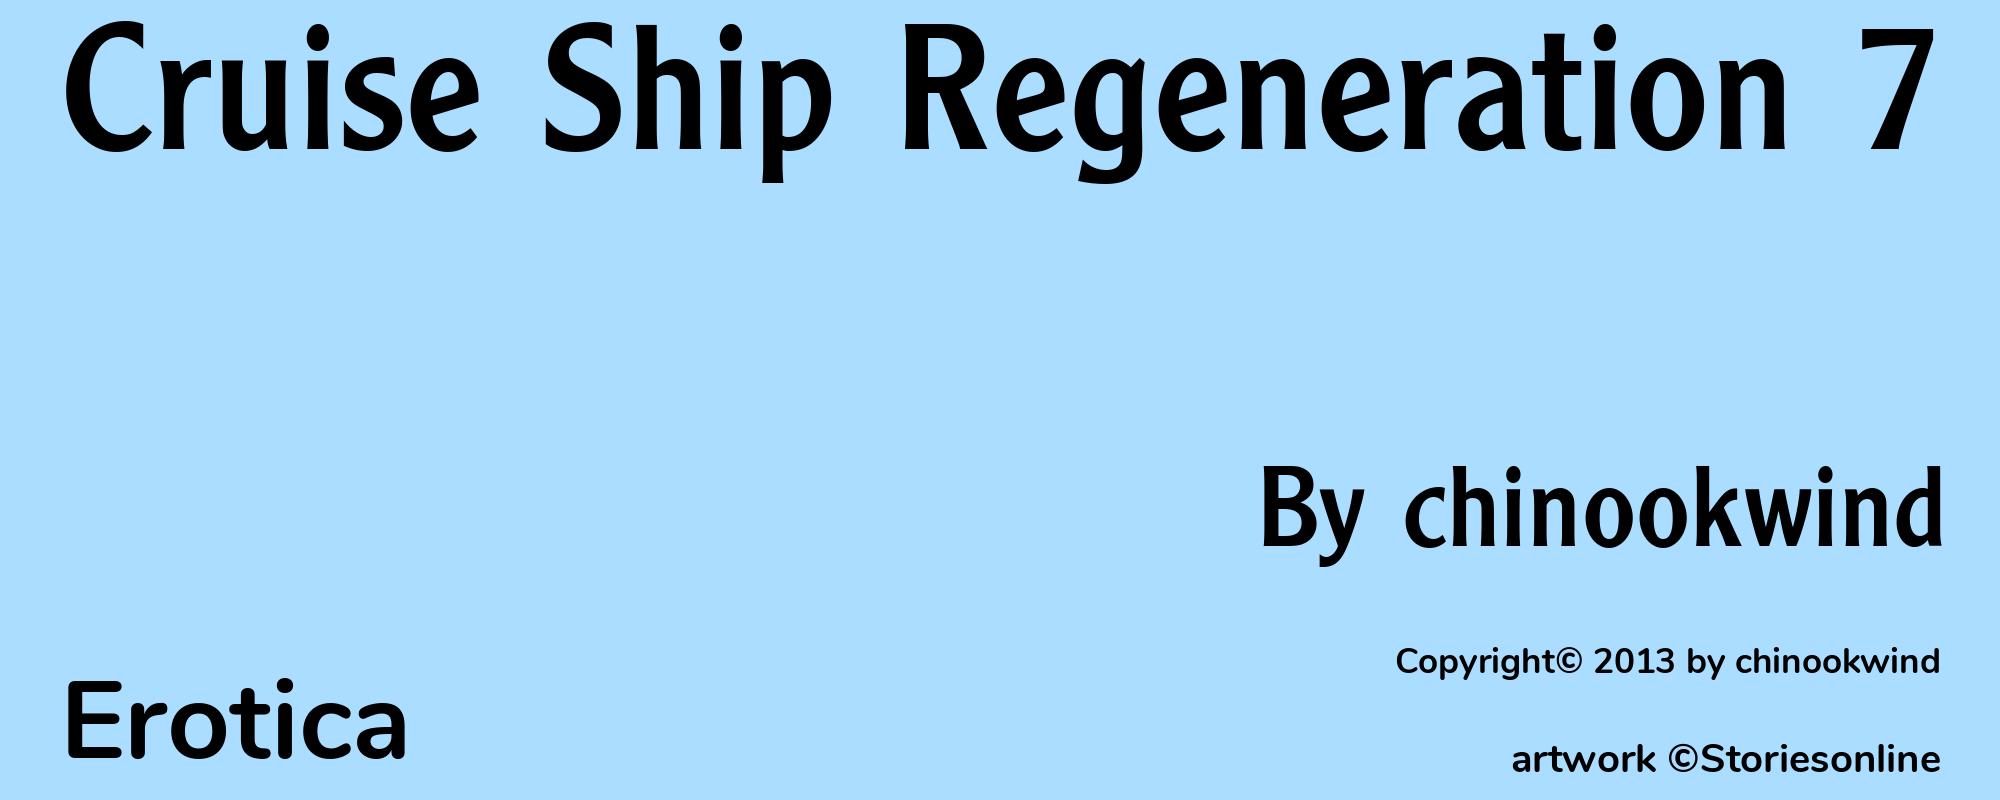 Cruise Ship Regeneration 7 - Cover